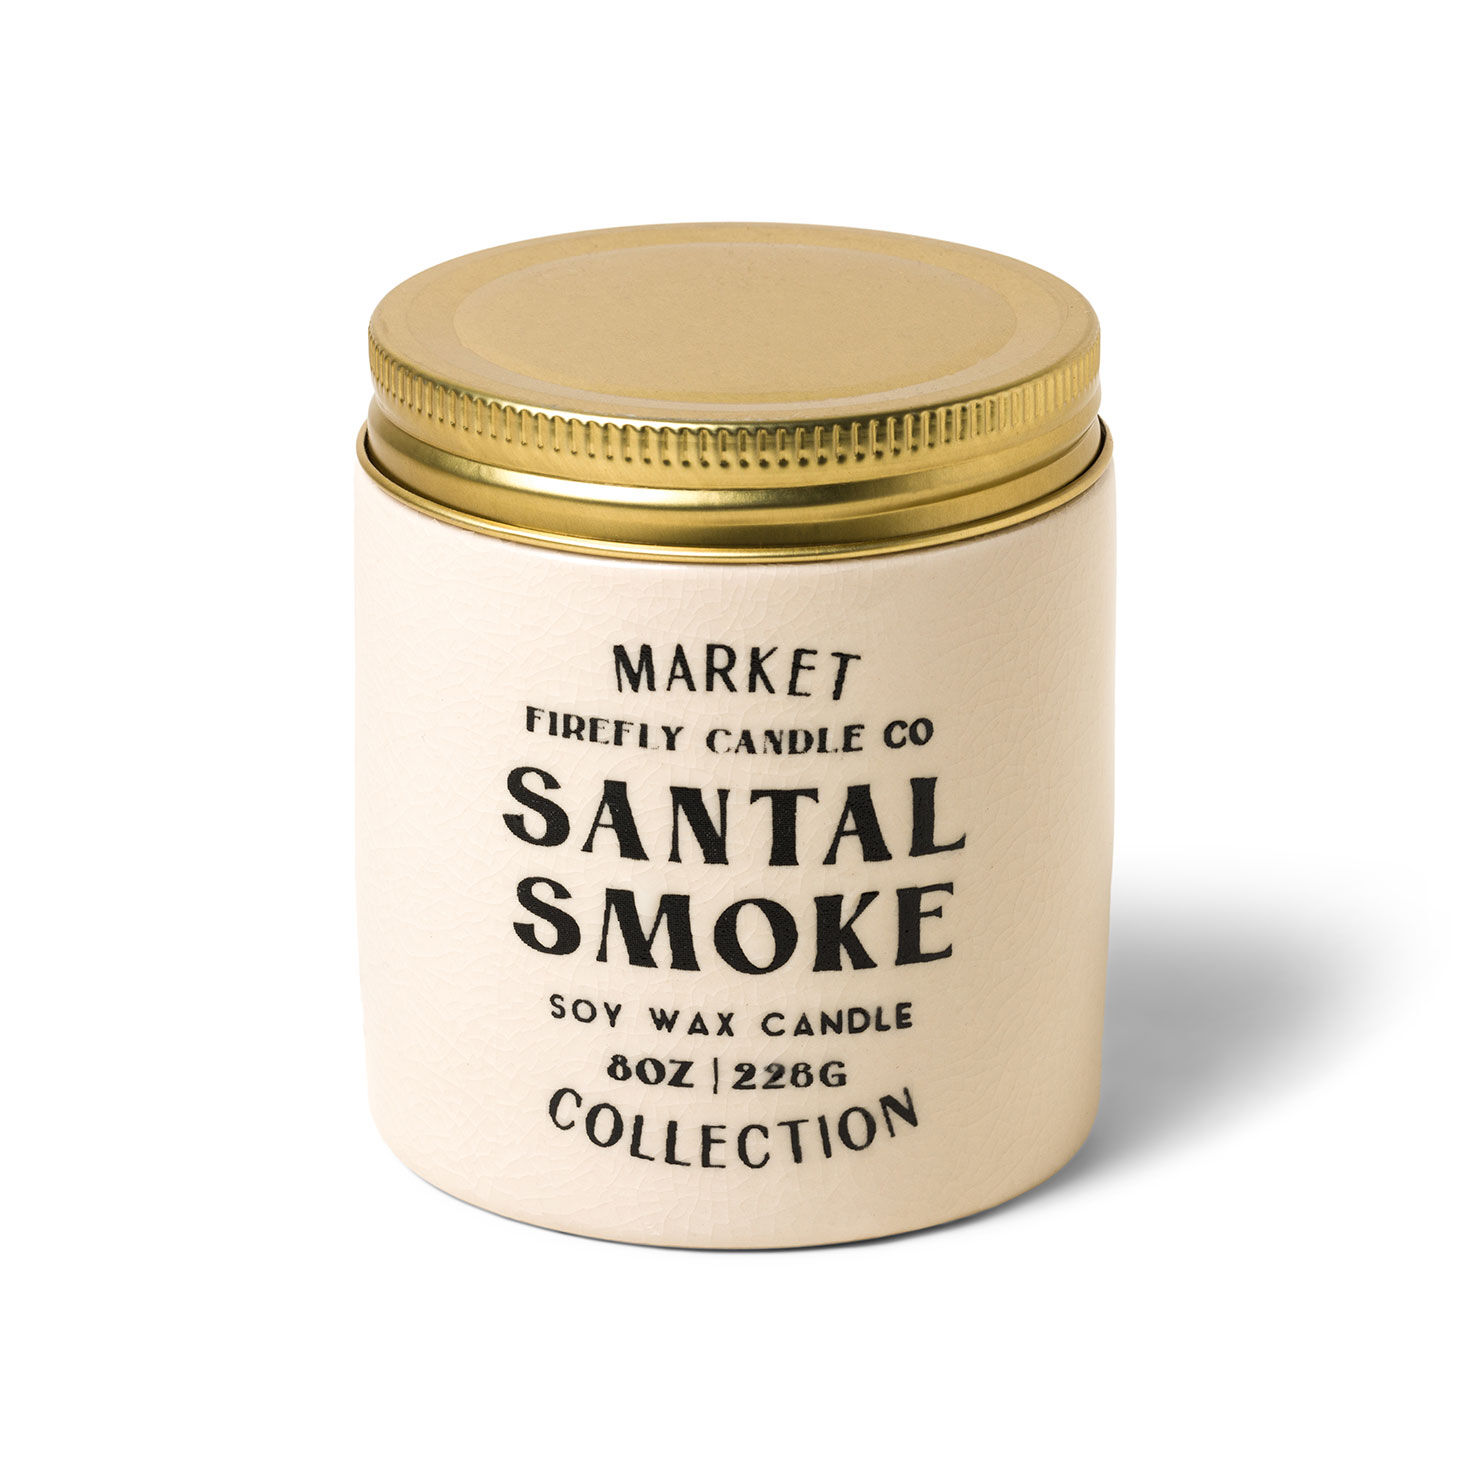 Paddywax Market Santal Smoke Jar Candle, 8 oz. for only USD 33.00 | Hallmark